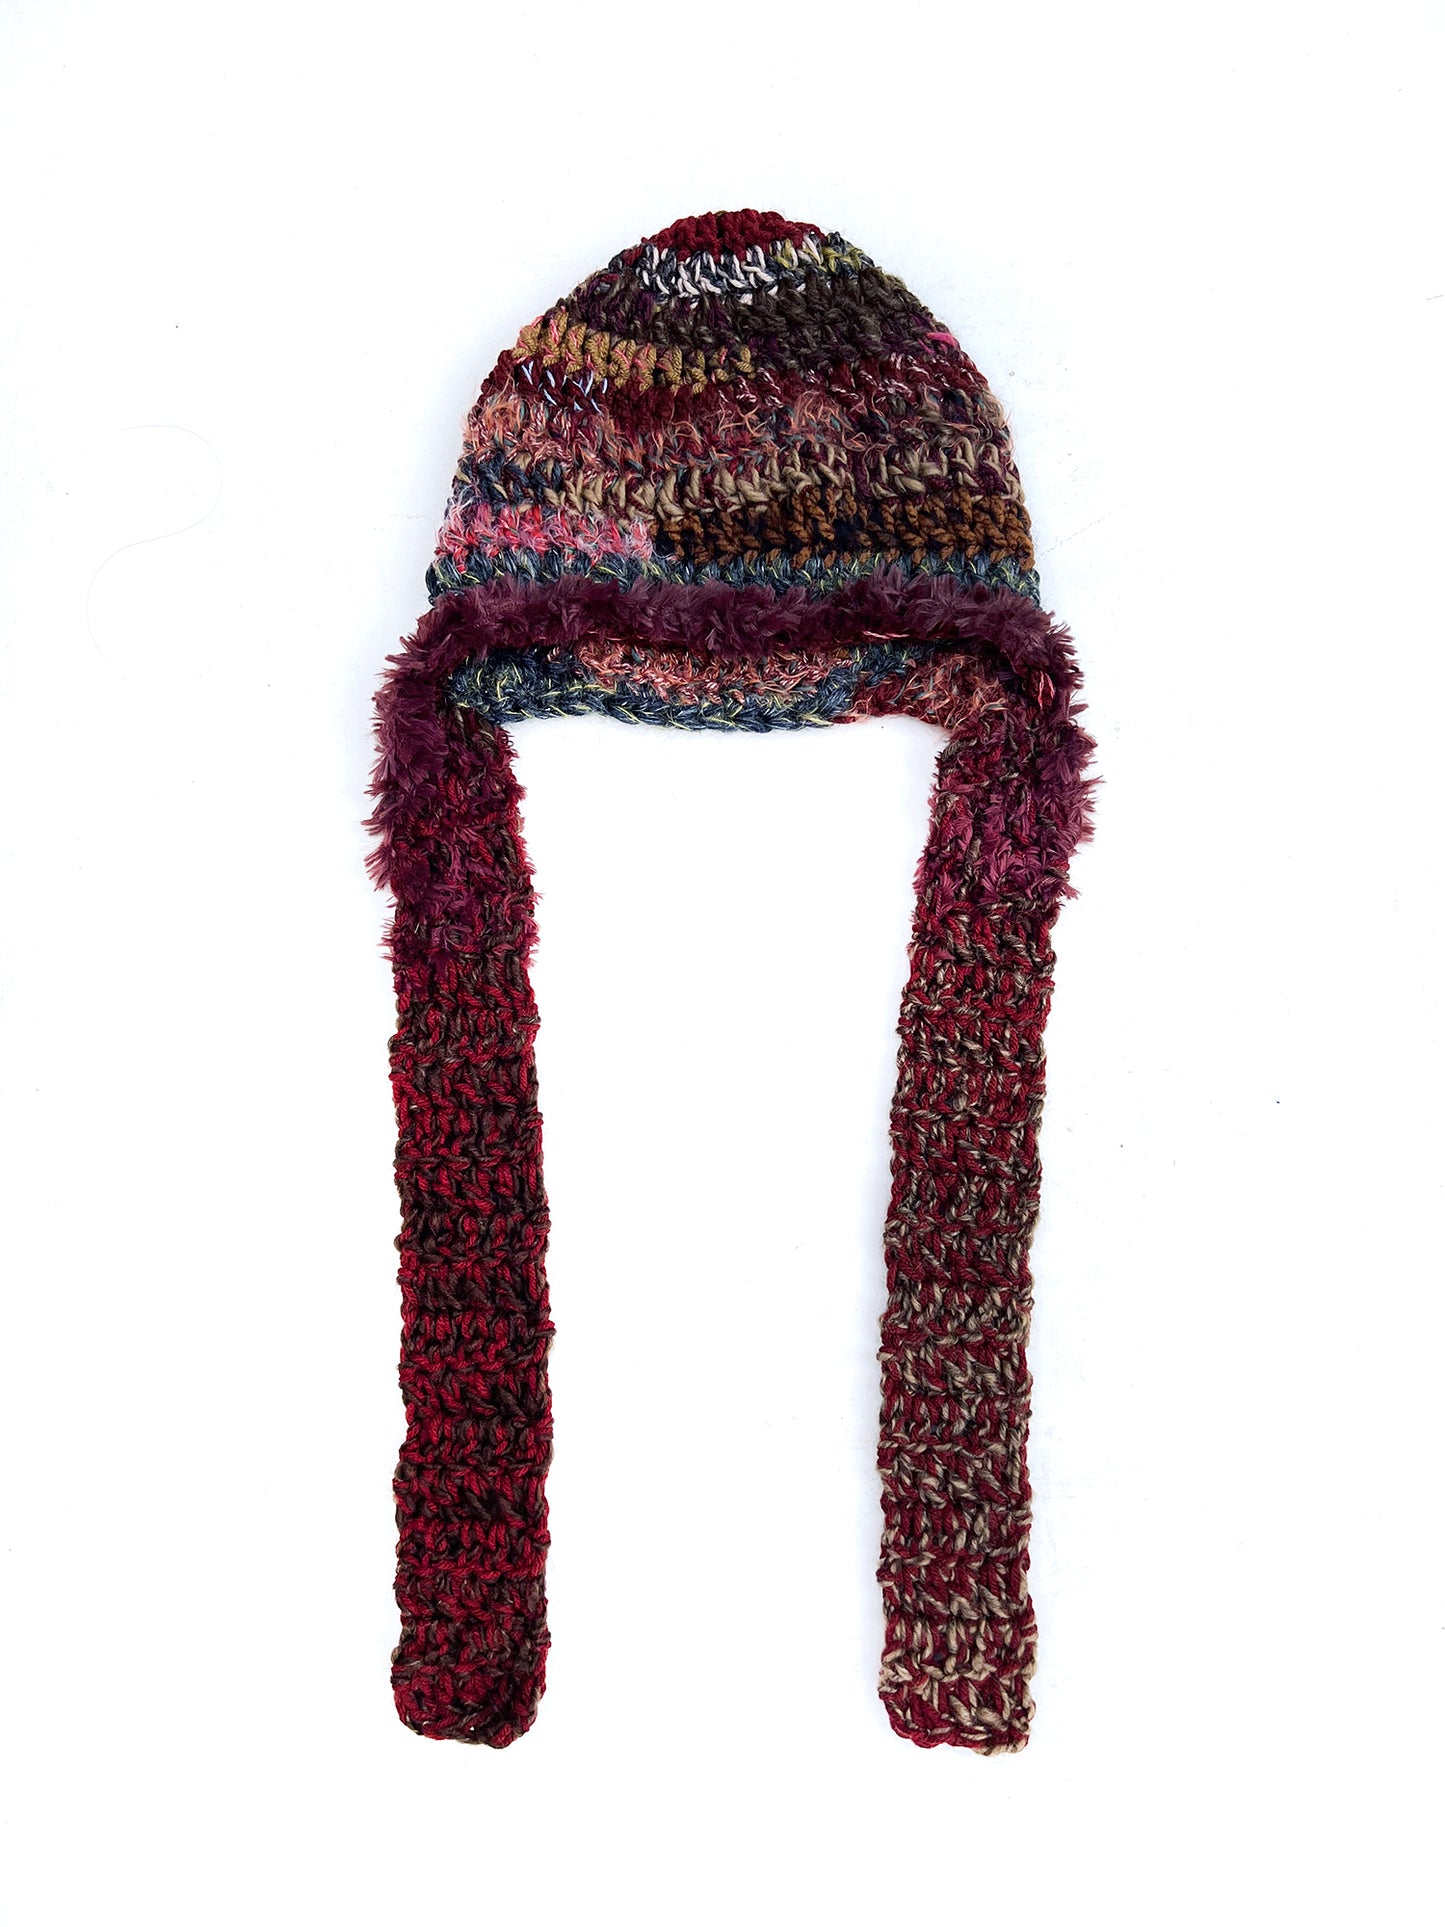 Cool Cat Crochet Hat #3 L/XL